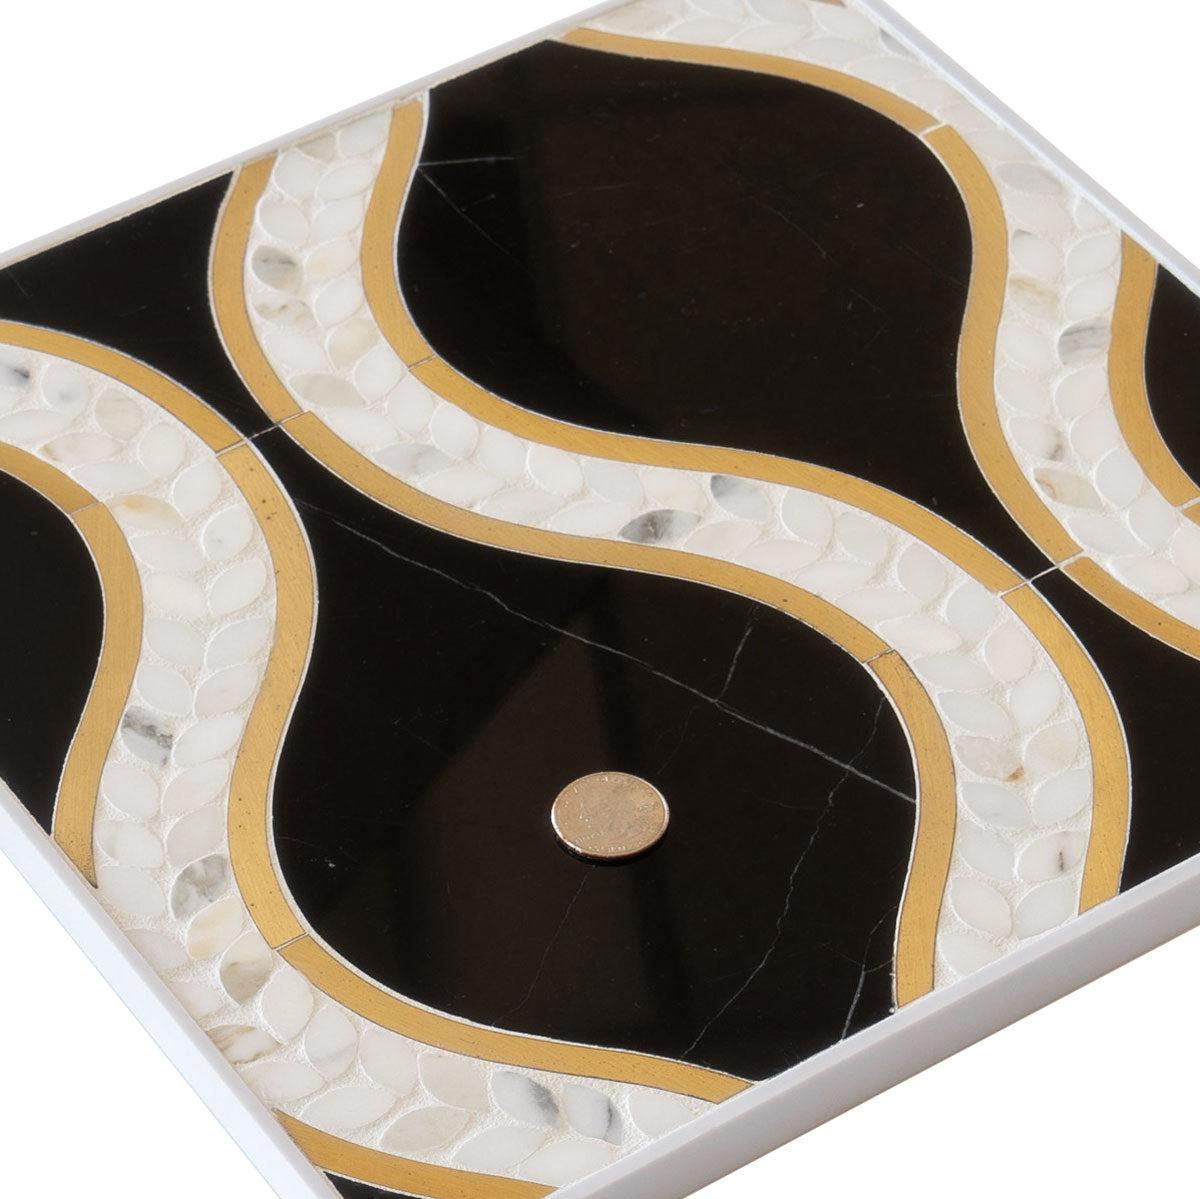 Santorini Black & Brass Laurel Marble Tile